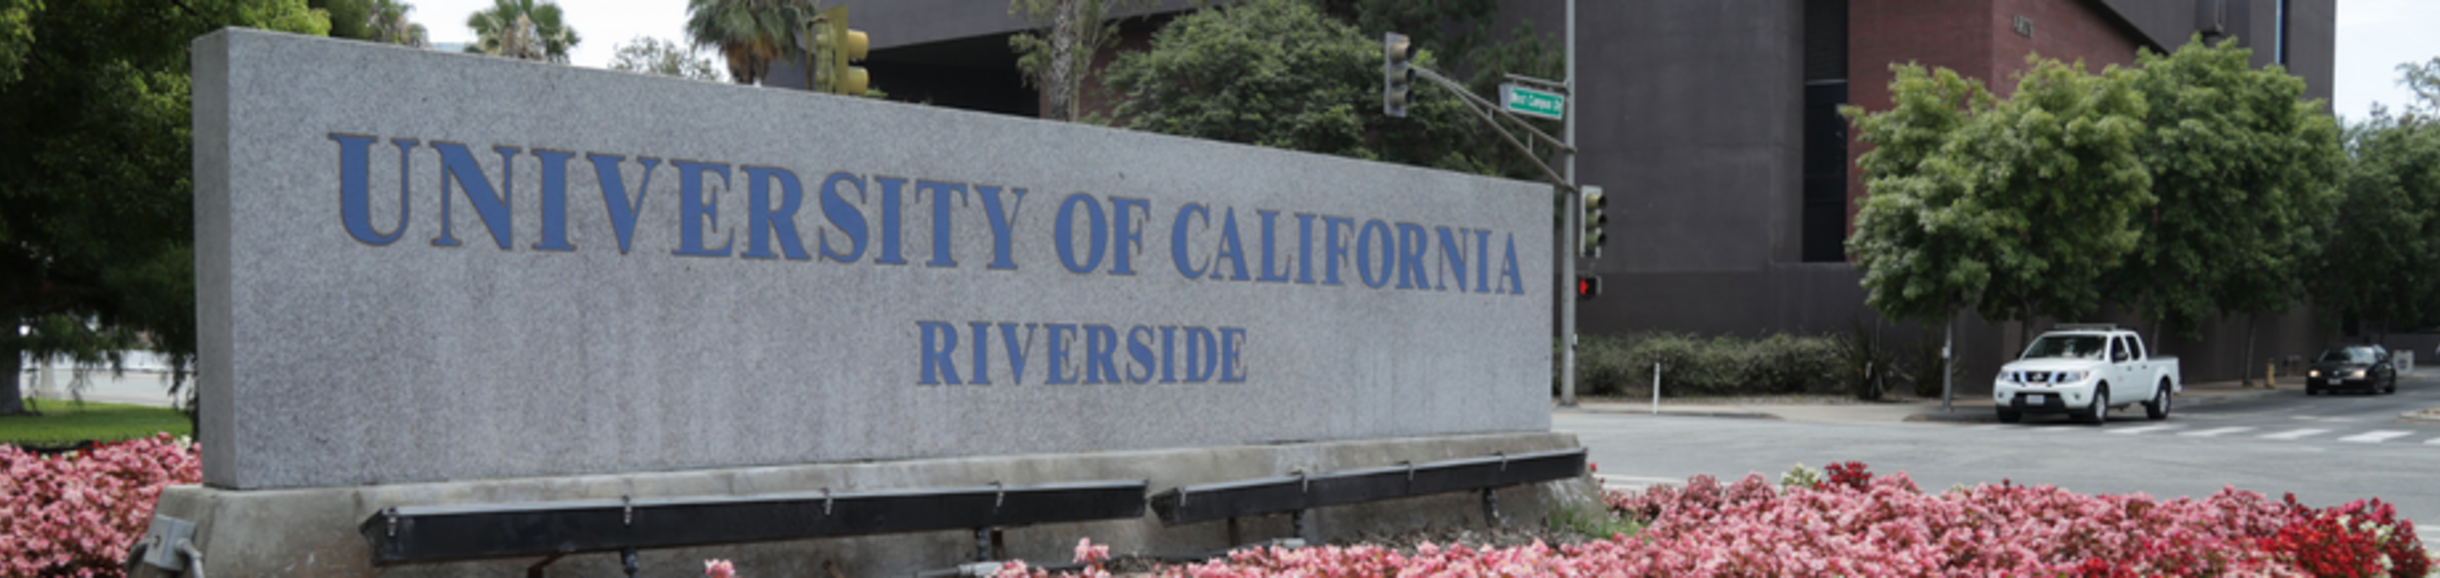 UC Riverside sign